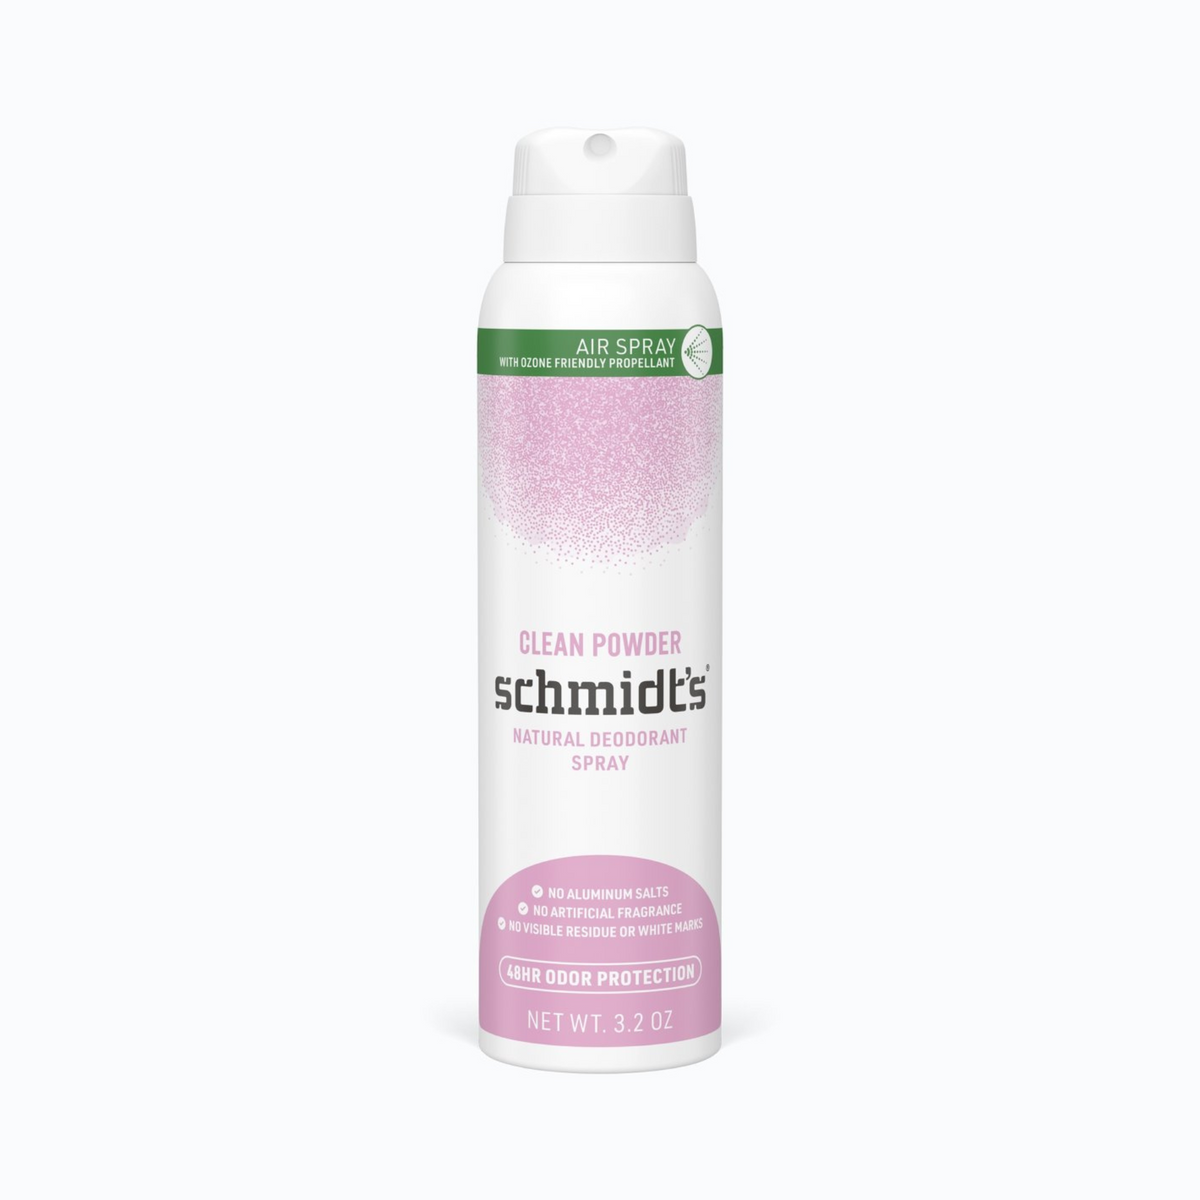 Primary Image of Schmidt's Clean Powder Deo Spray (3.2 oz)